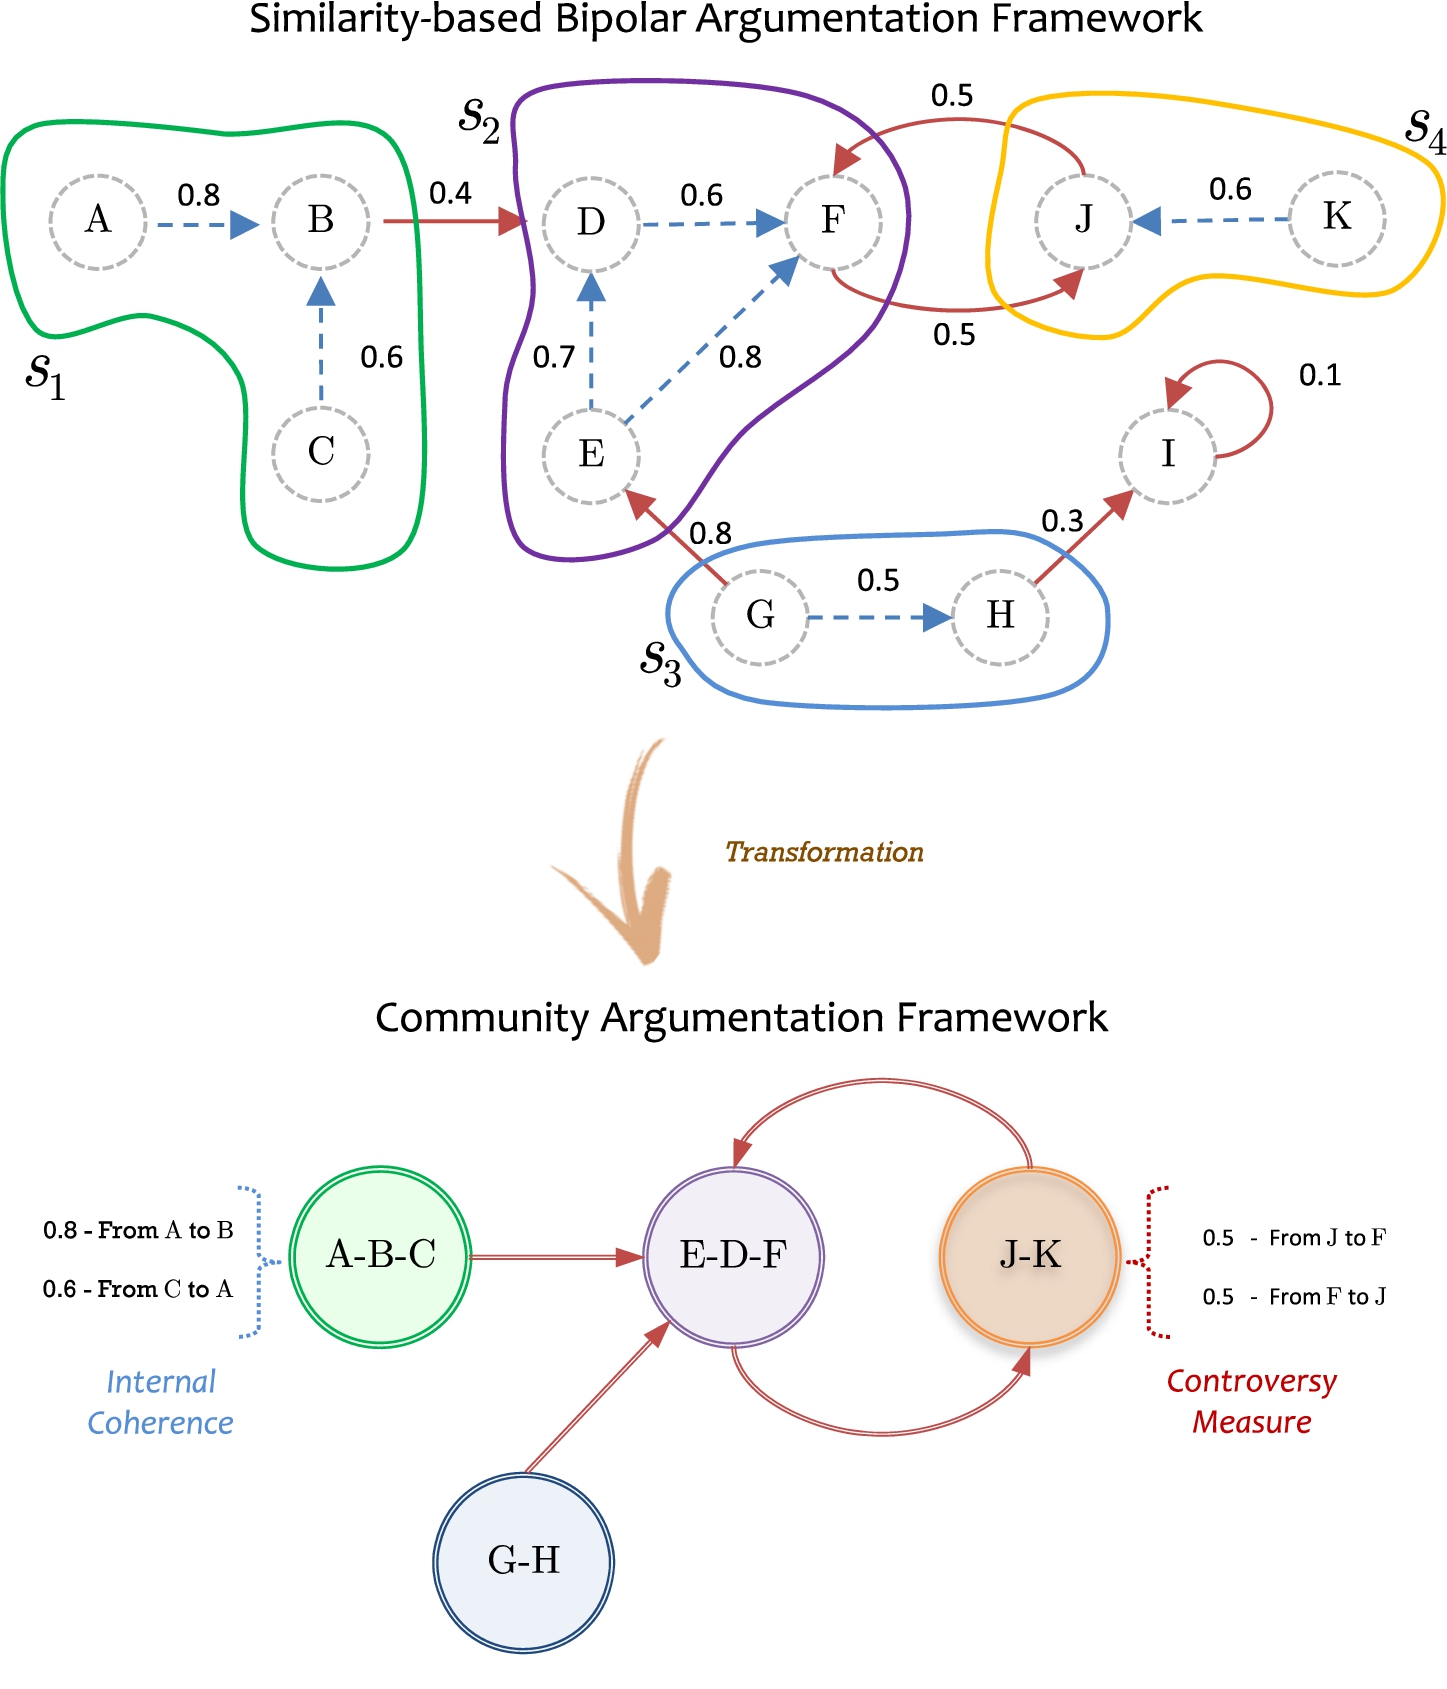 Communities in bipolar argumentation frameworks.